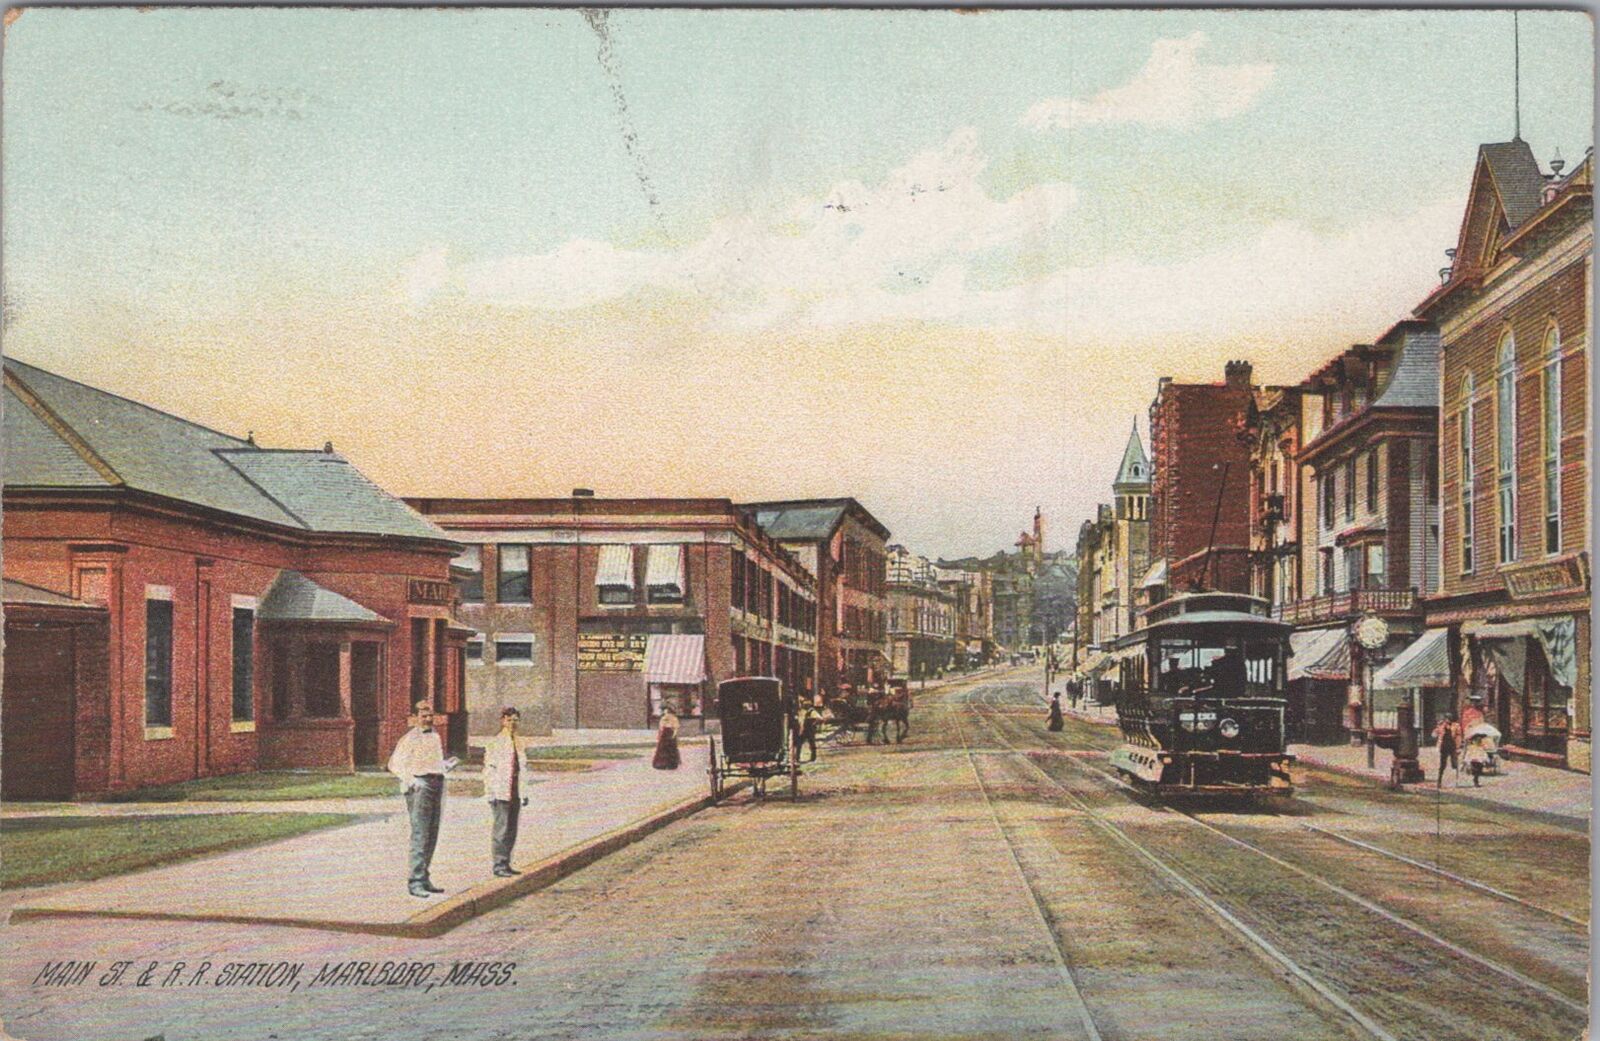 Main St. R.R. Railroad Station, Marlboro, Massachusetts Trolley 1910 Postcard